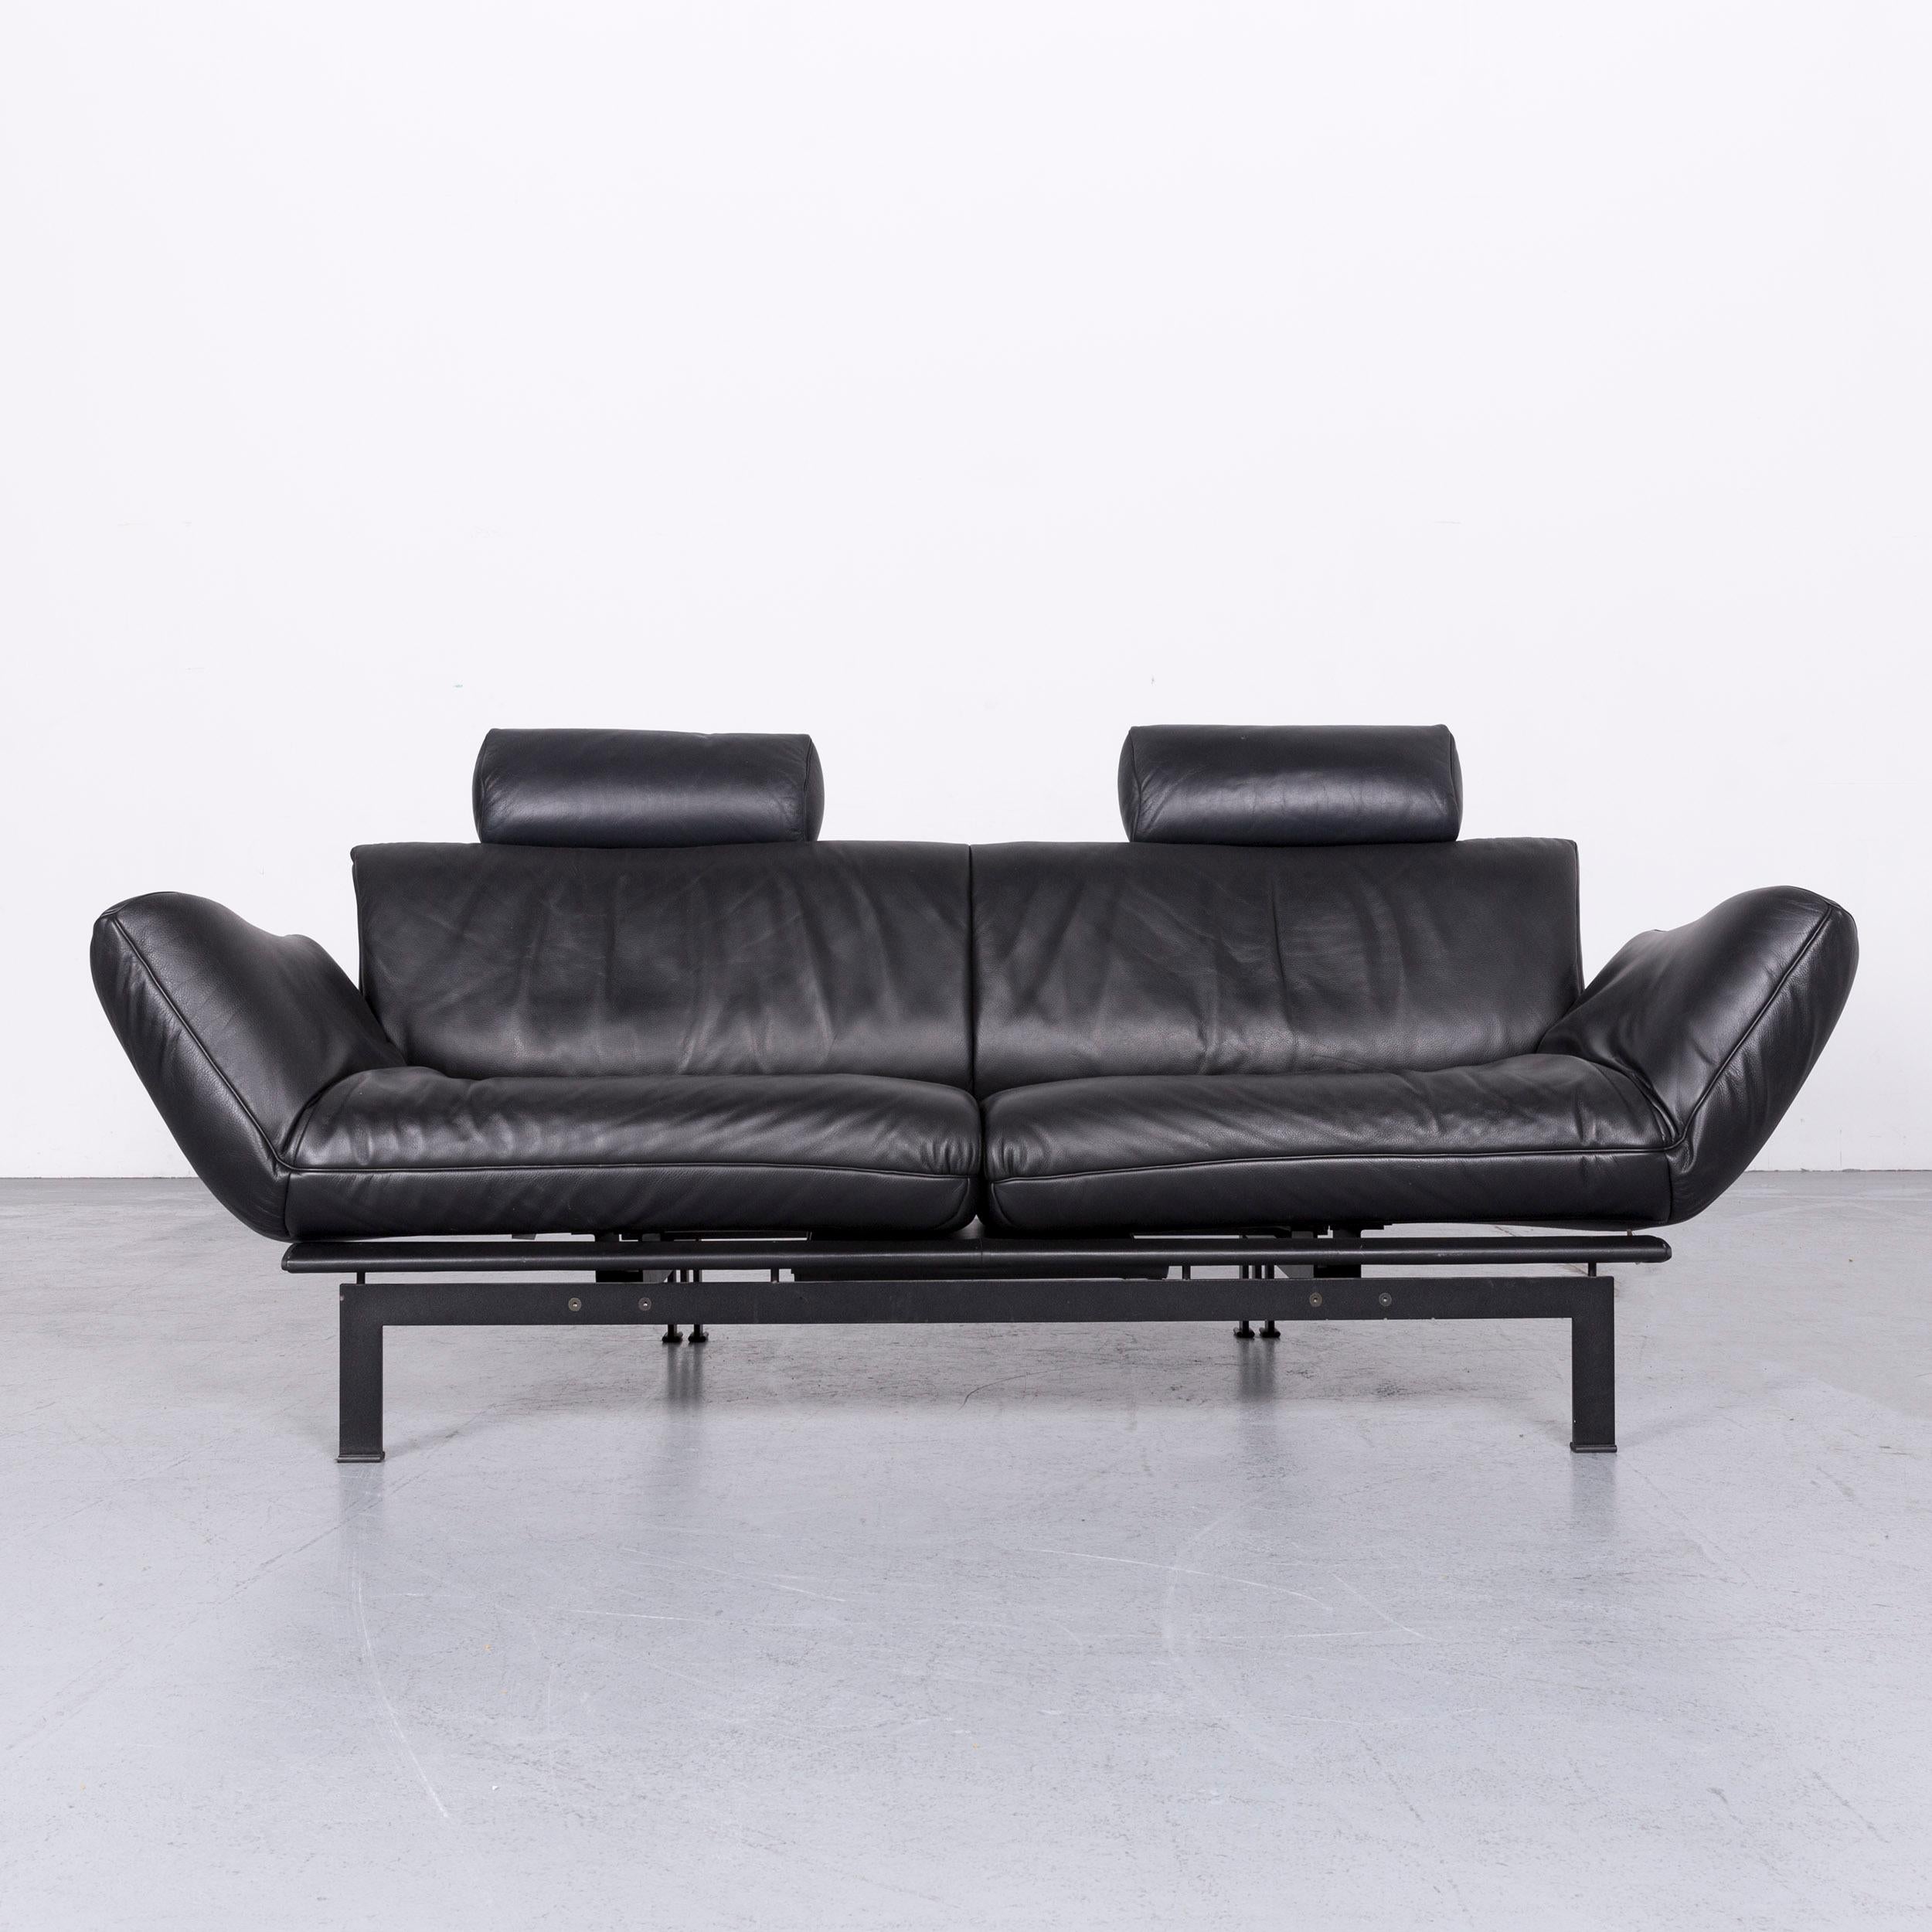 Contemporary De Sede Ds 140 Designer Leather Sofa Black Three-Seat Function Modern For Sale